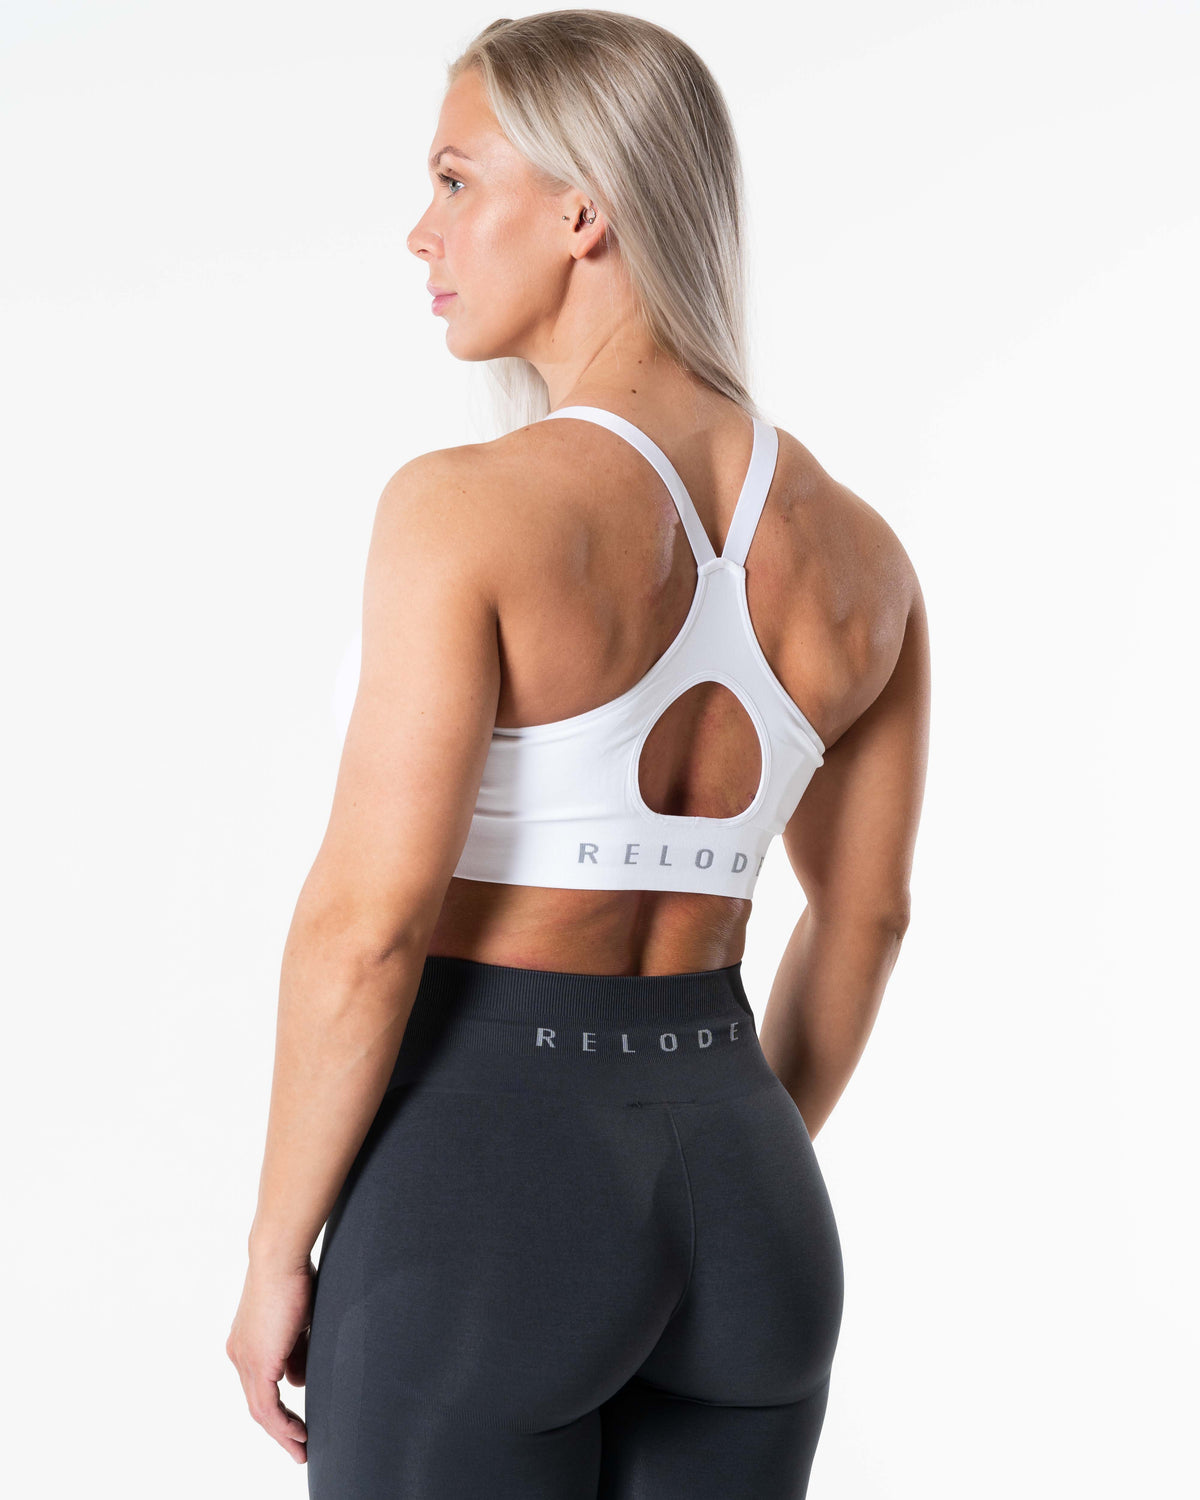 Sports bra with back closure - Activewear manufacturer Sportswear  Manufacturer HL